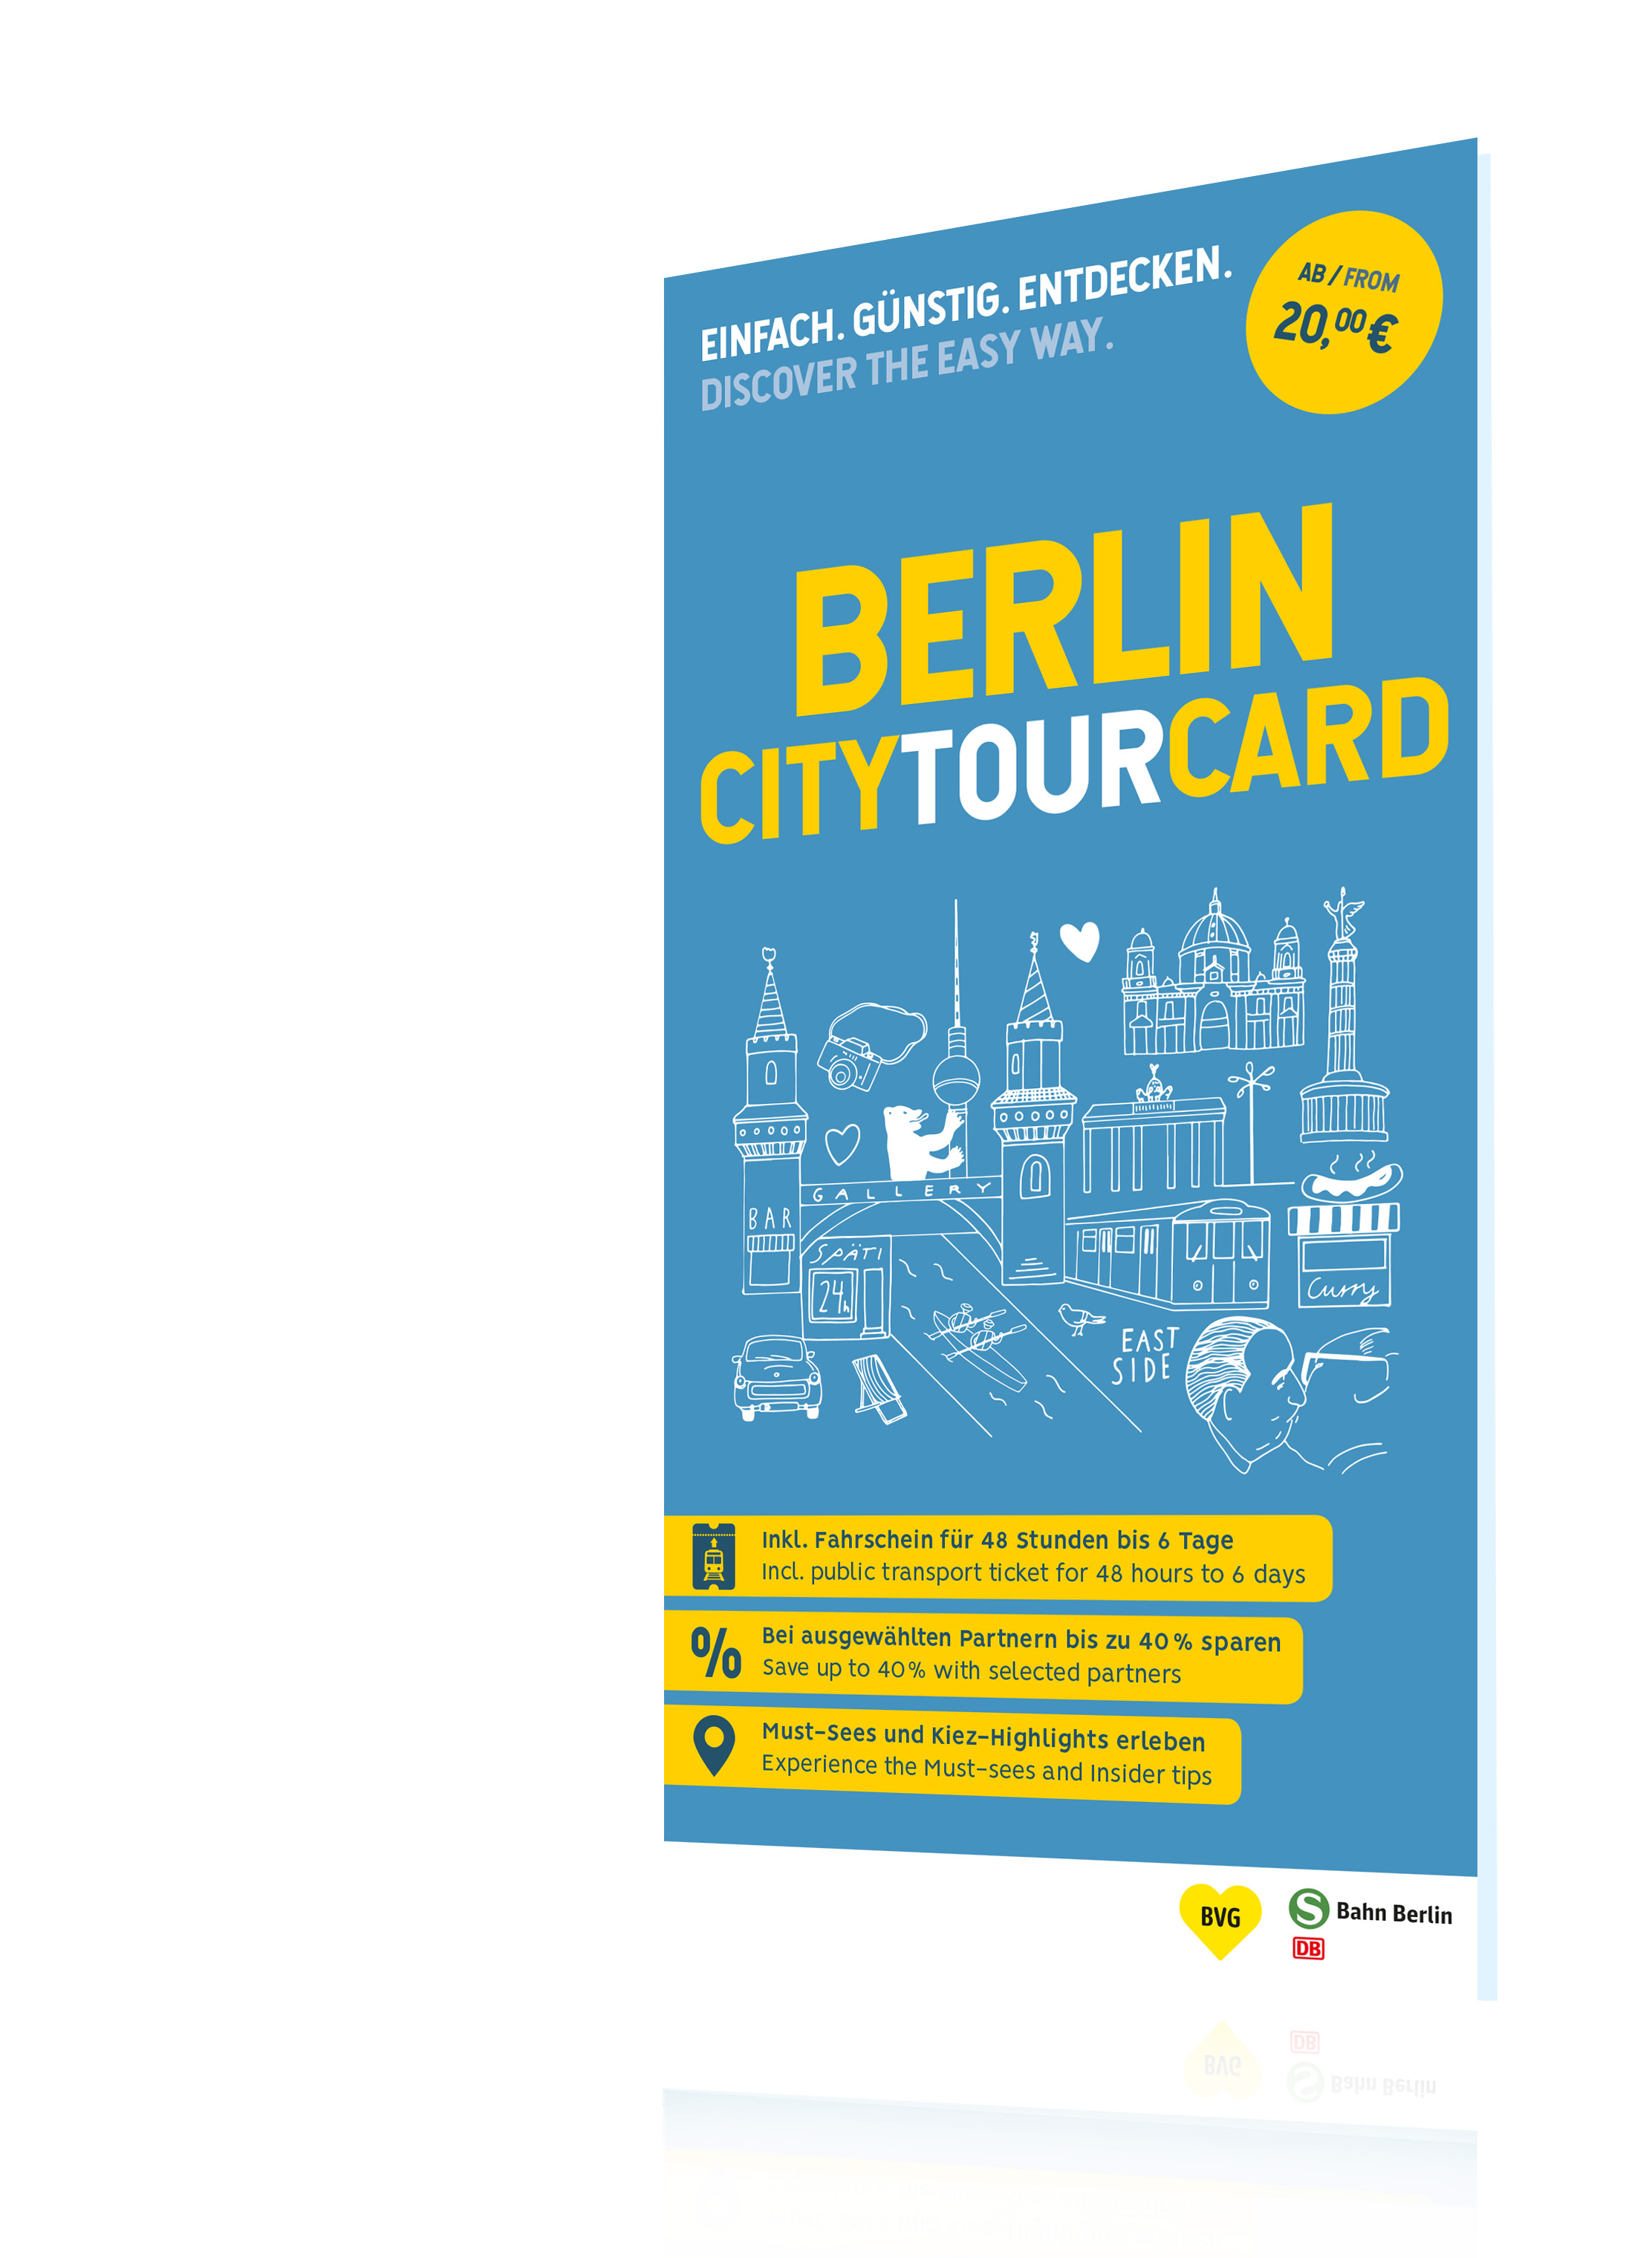 berlin city tour card und welcome card